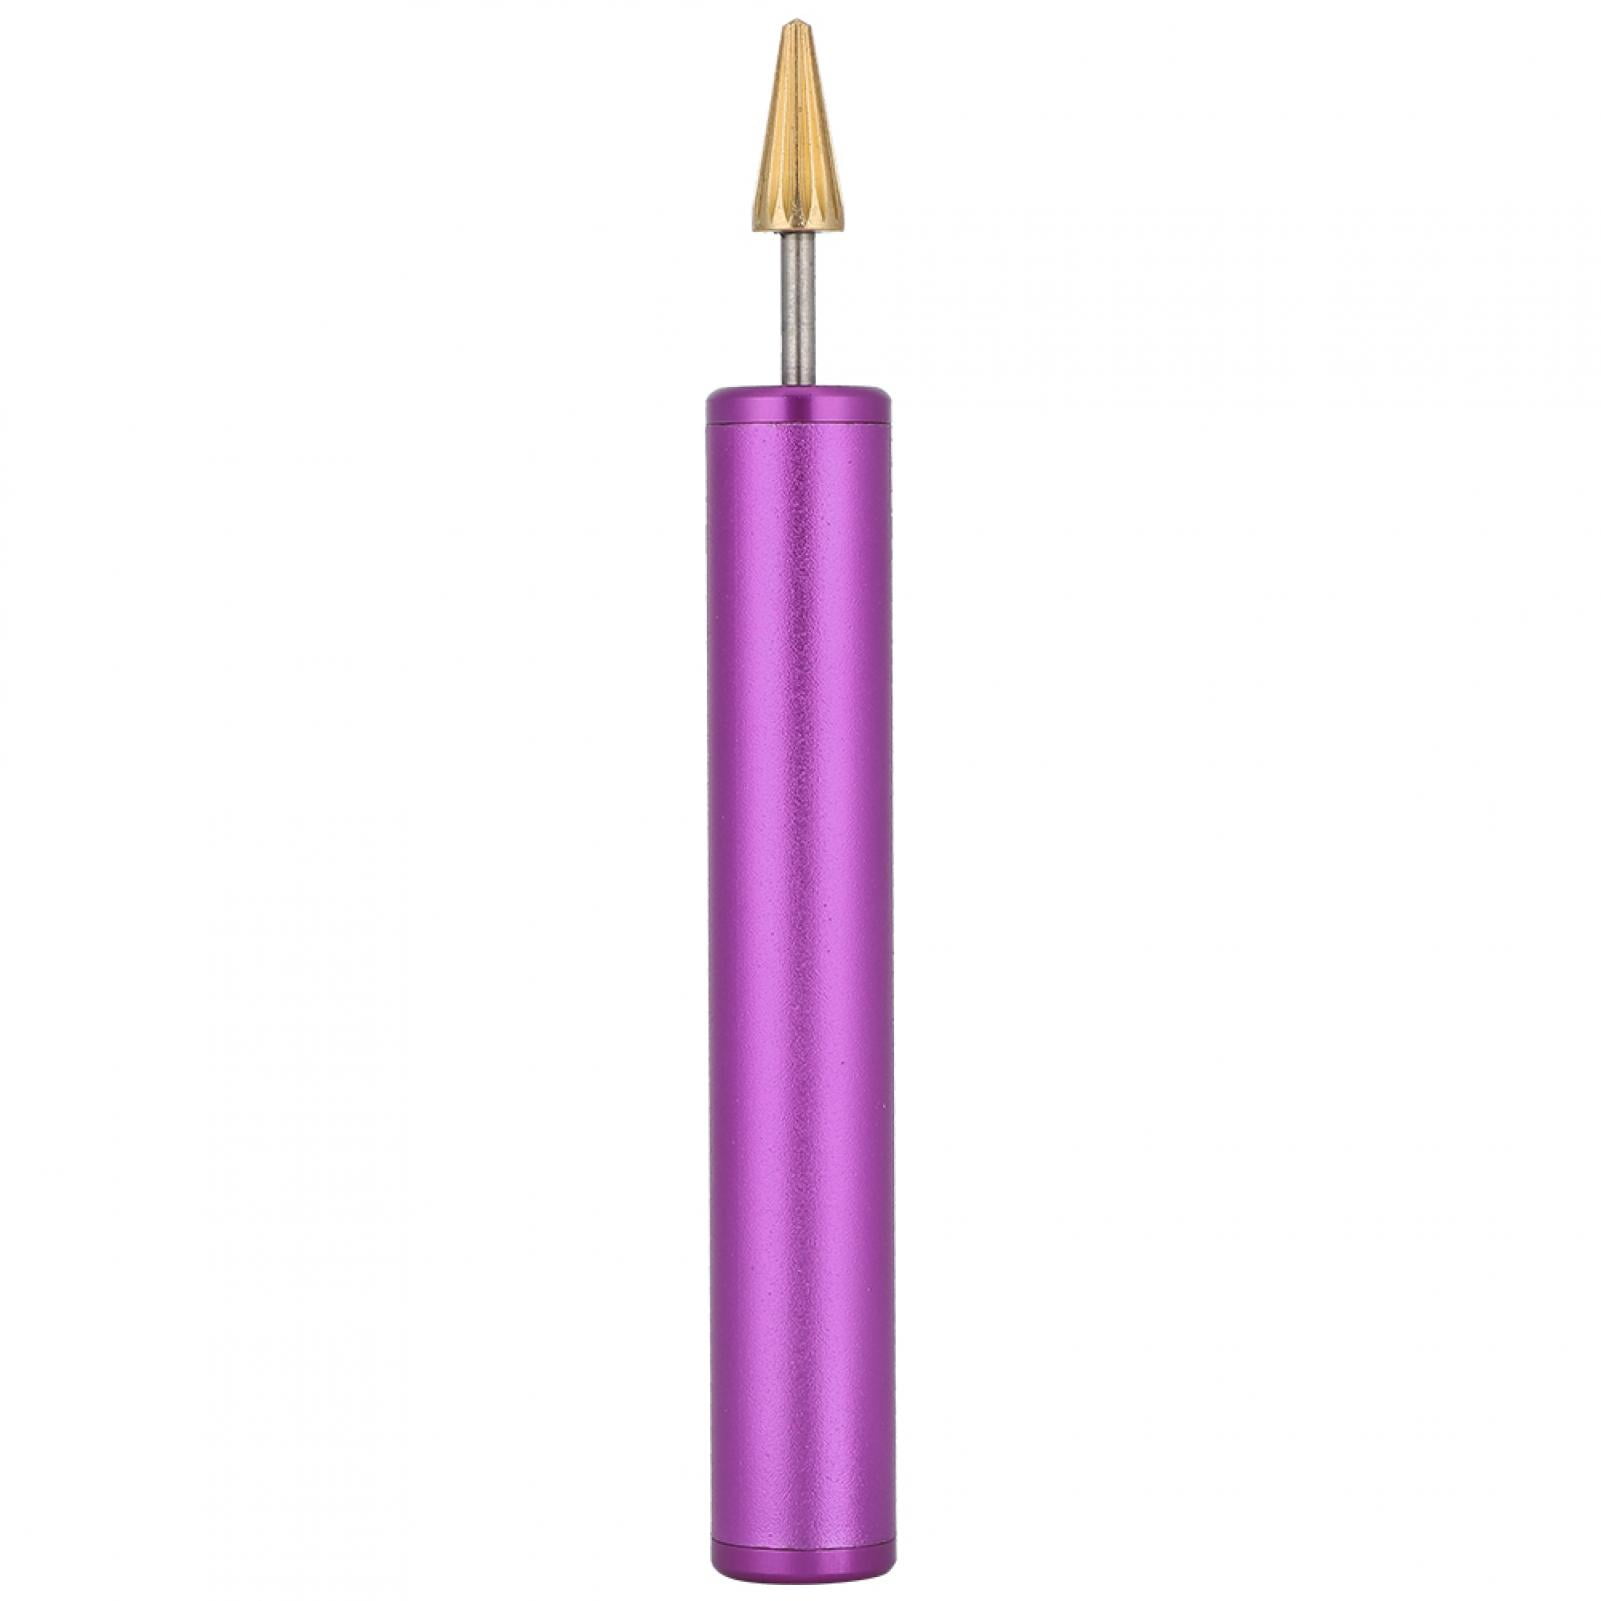 Fiebing's Edge Kote Roller Pen - Roll on Applicator for Edge Kote, Leather Dye, Acrylic Dye, Pro Dye, Paint & Finishes on Leather Edges